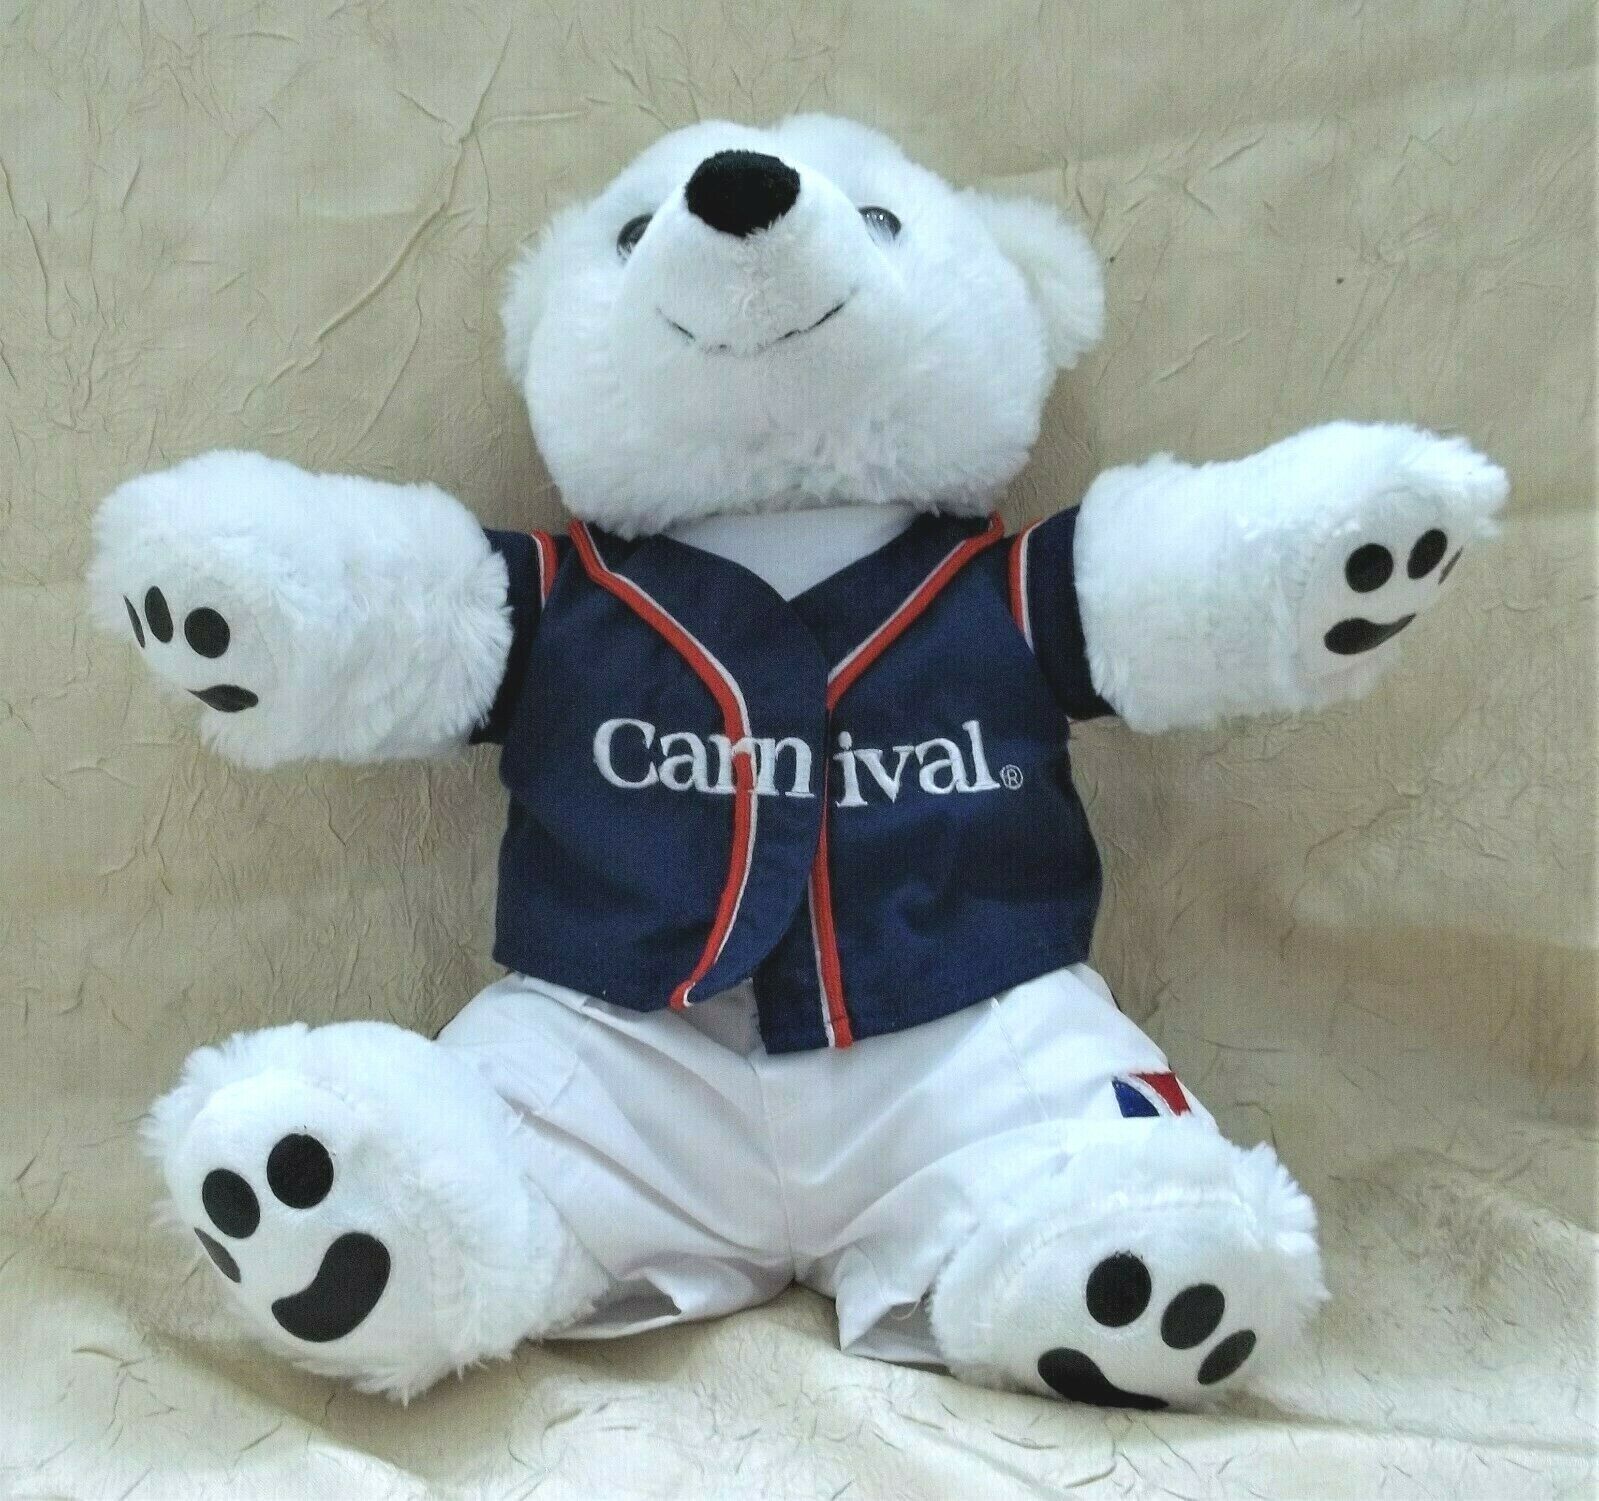 Carnival Cruise Line White Teddy Bear Plush Toy In Carnival Uniform